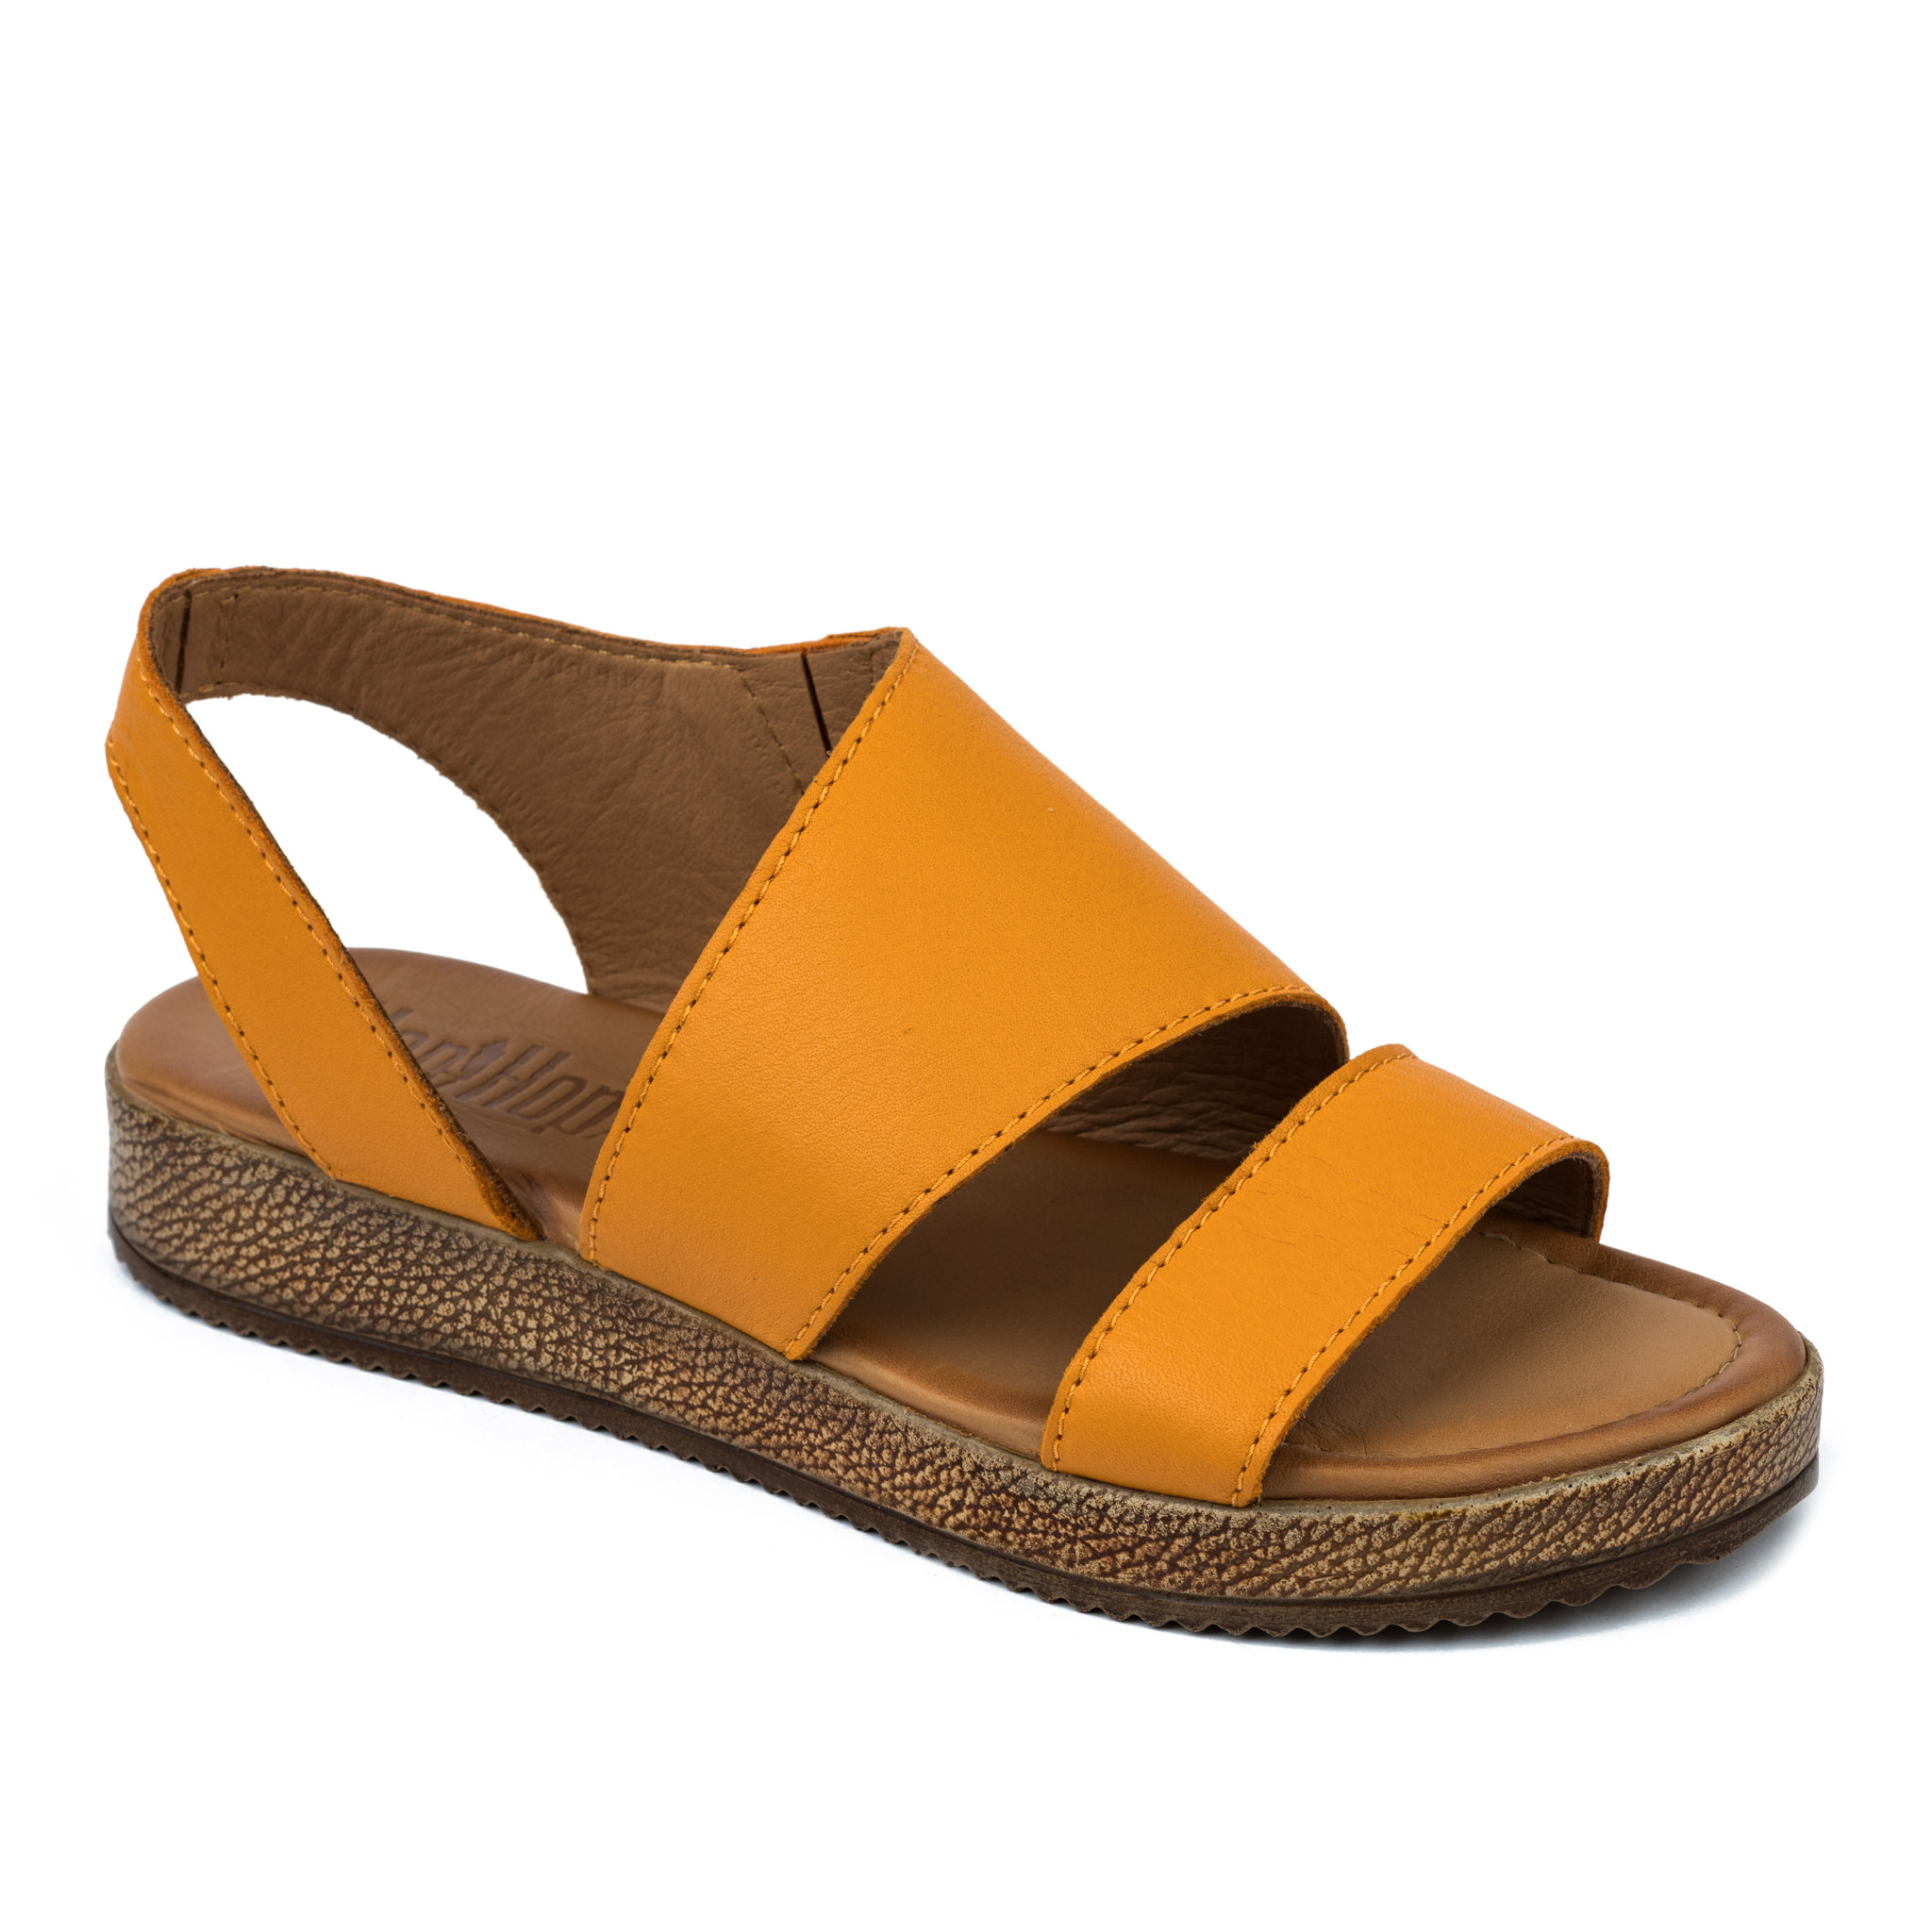 Leather sandals A683 - ORANGE